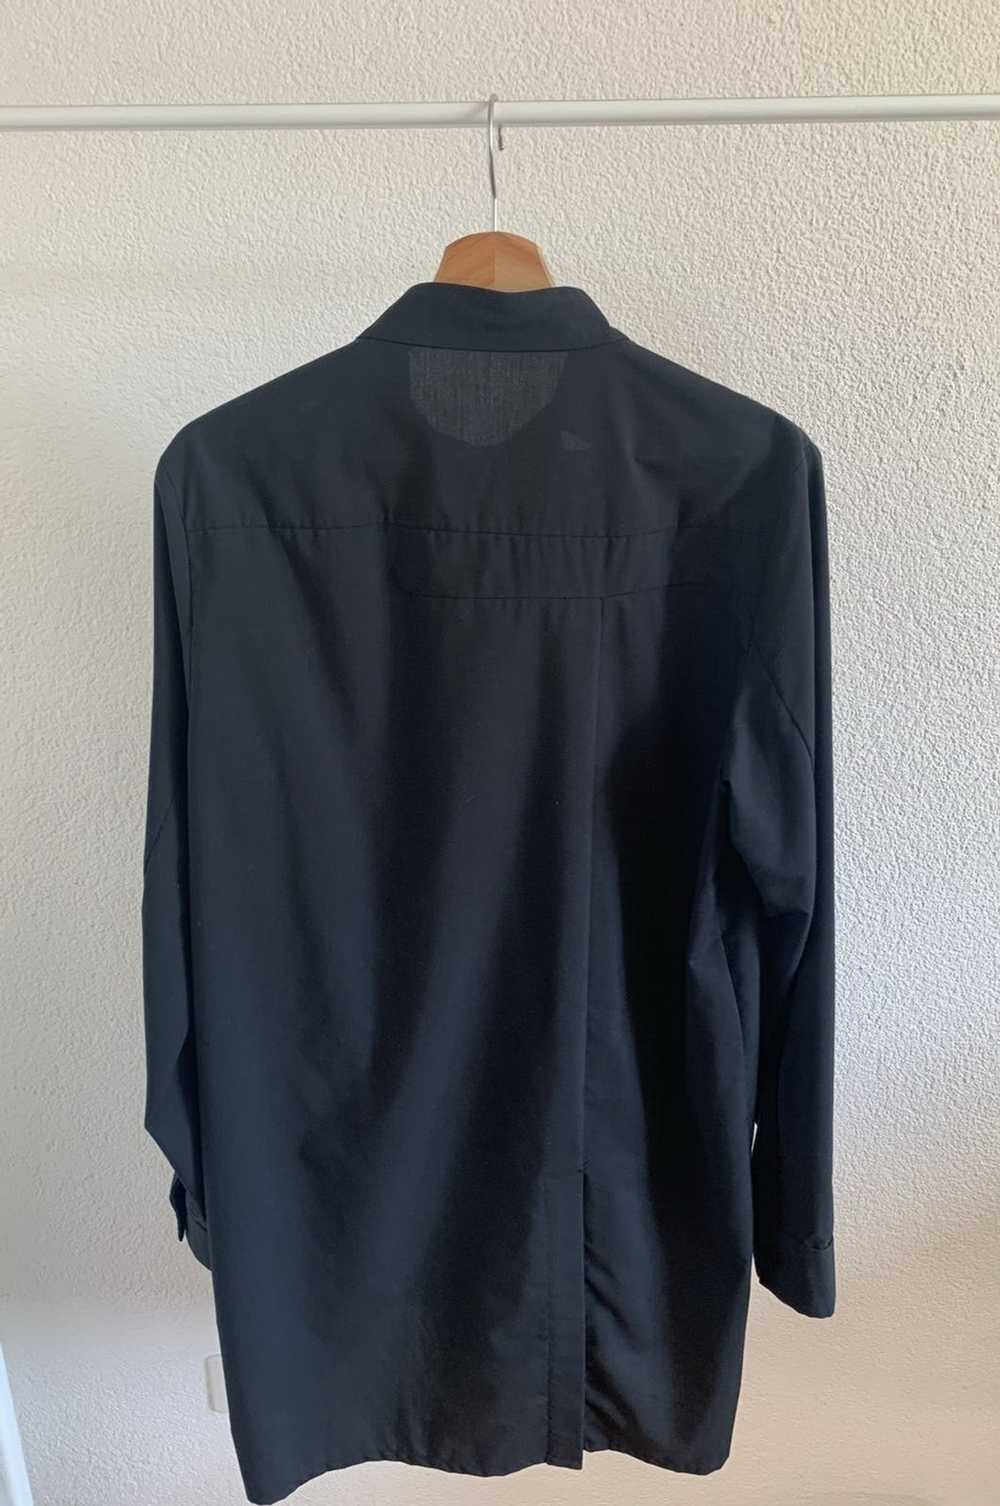 Indice Studio Deconstructed shirt coat - image 2